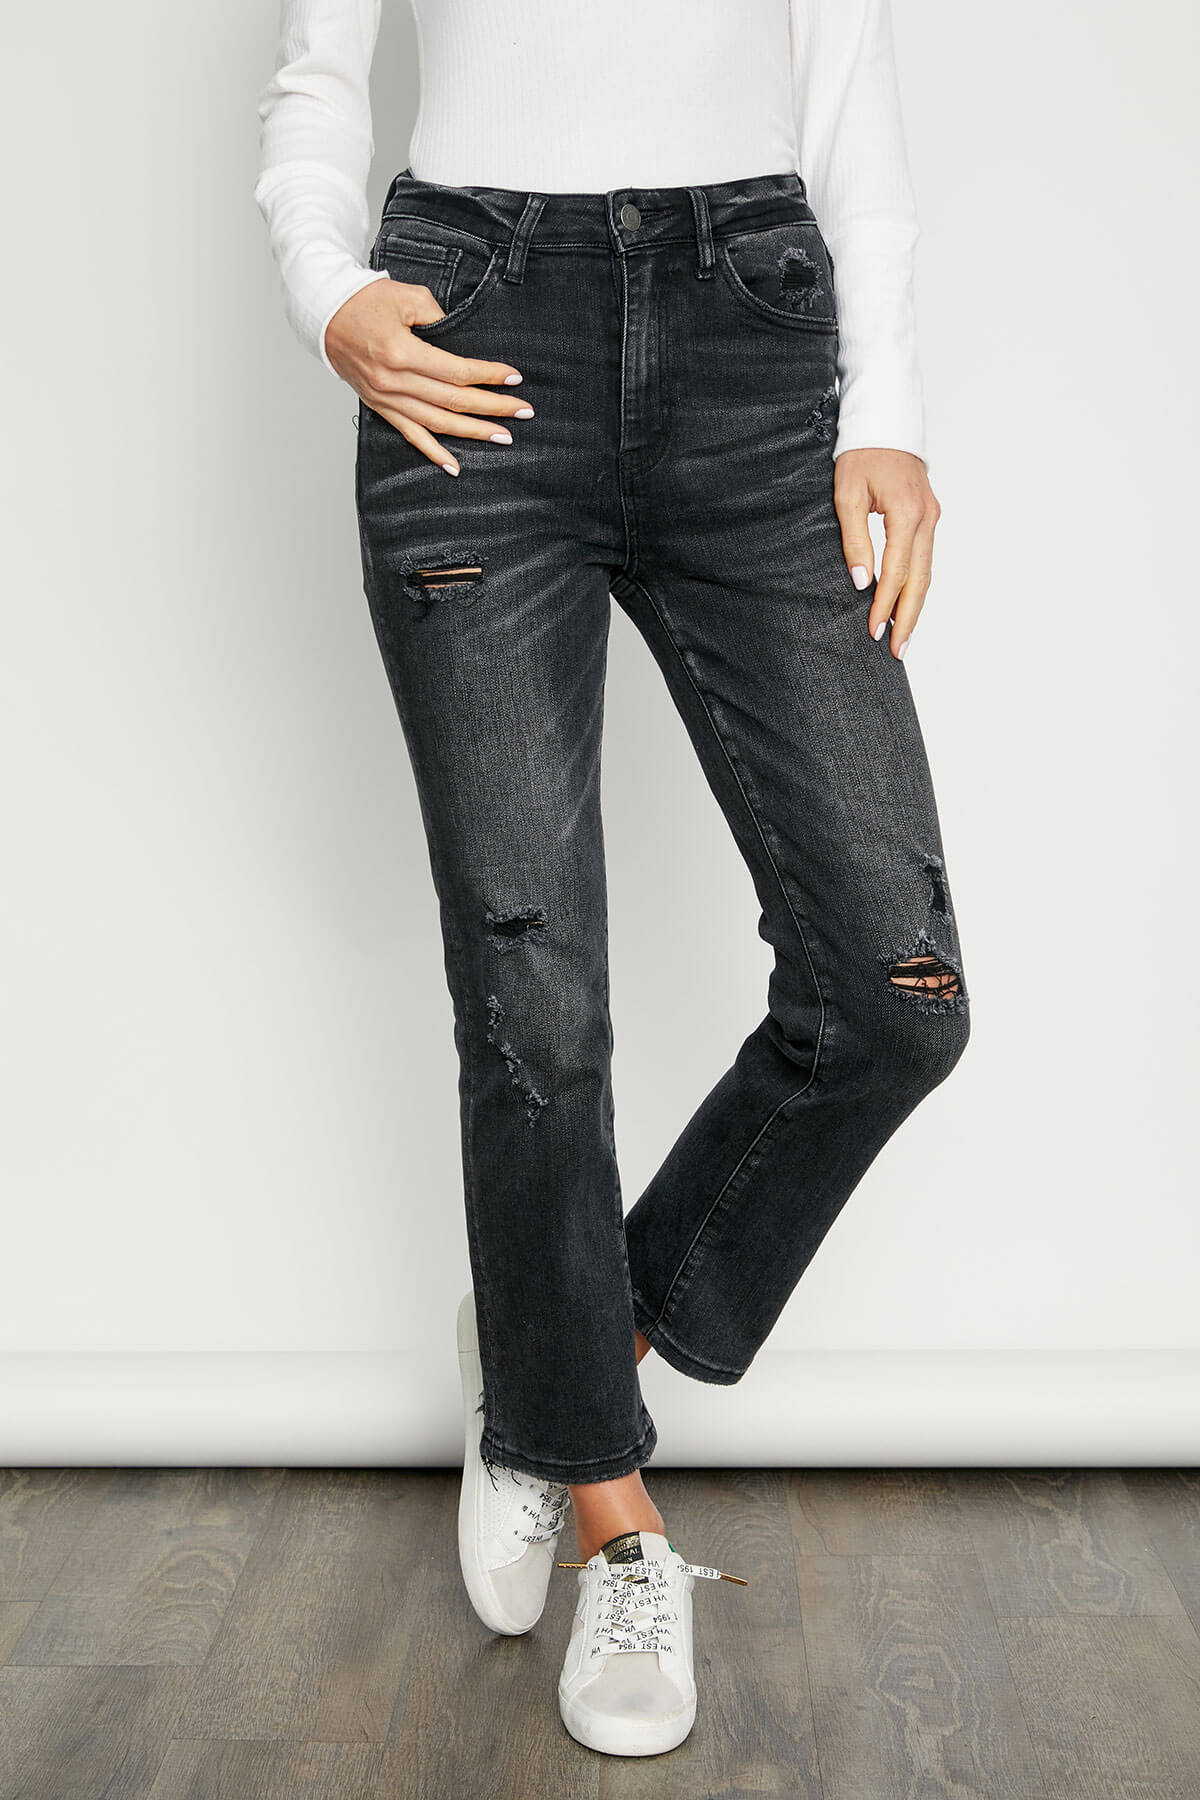 black-jbrand-jeans-high-waist - So Sage Blog